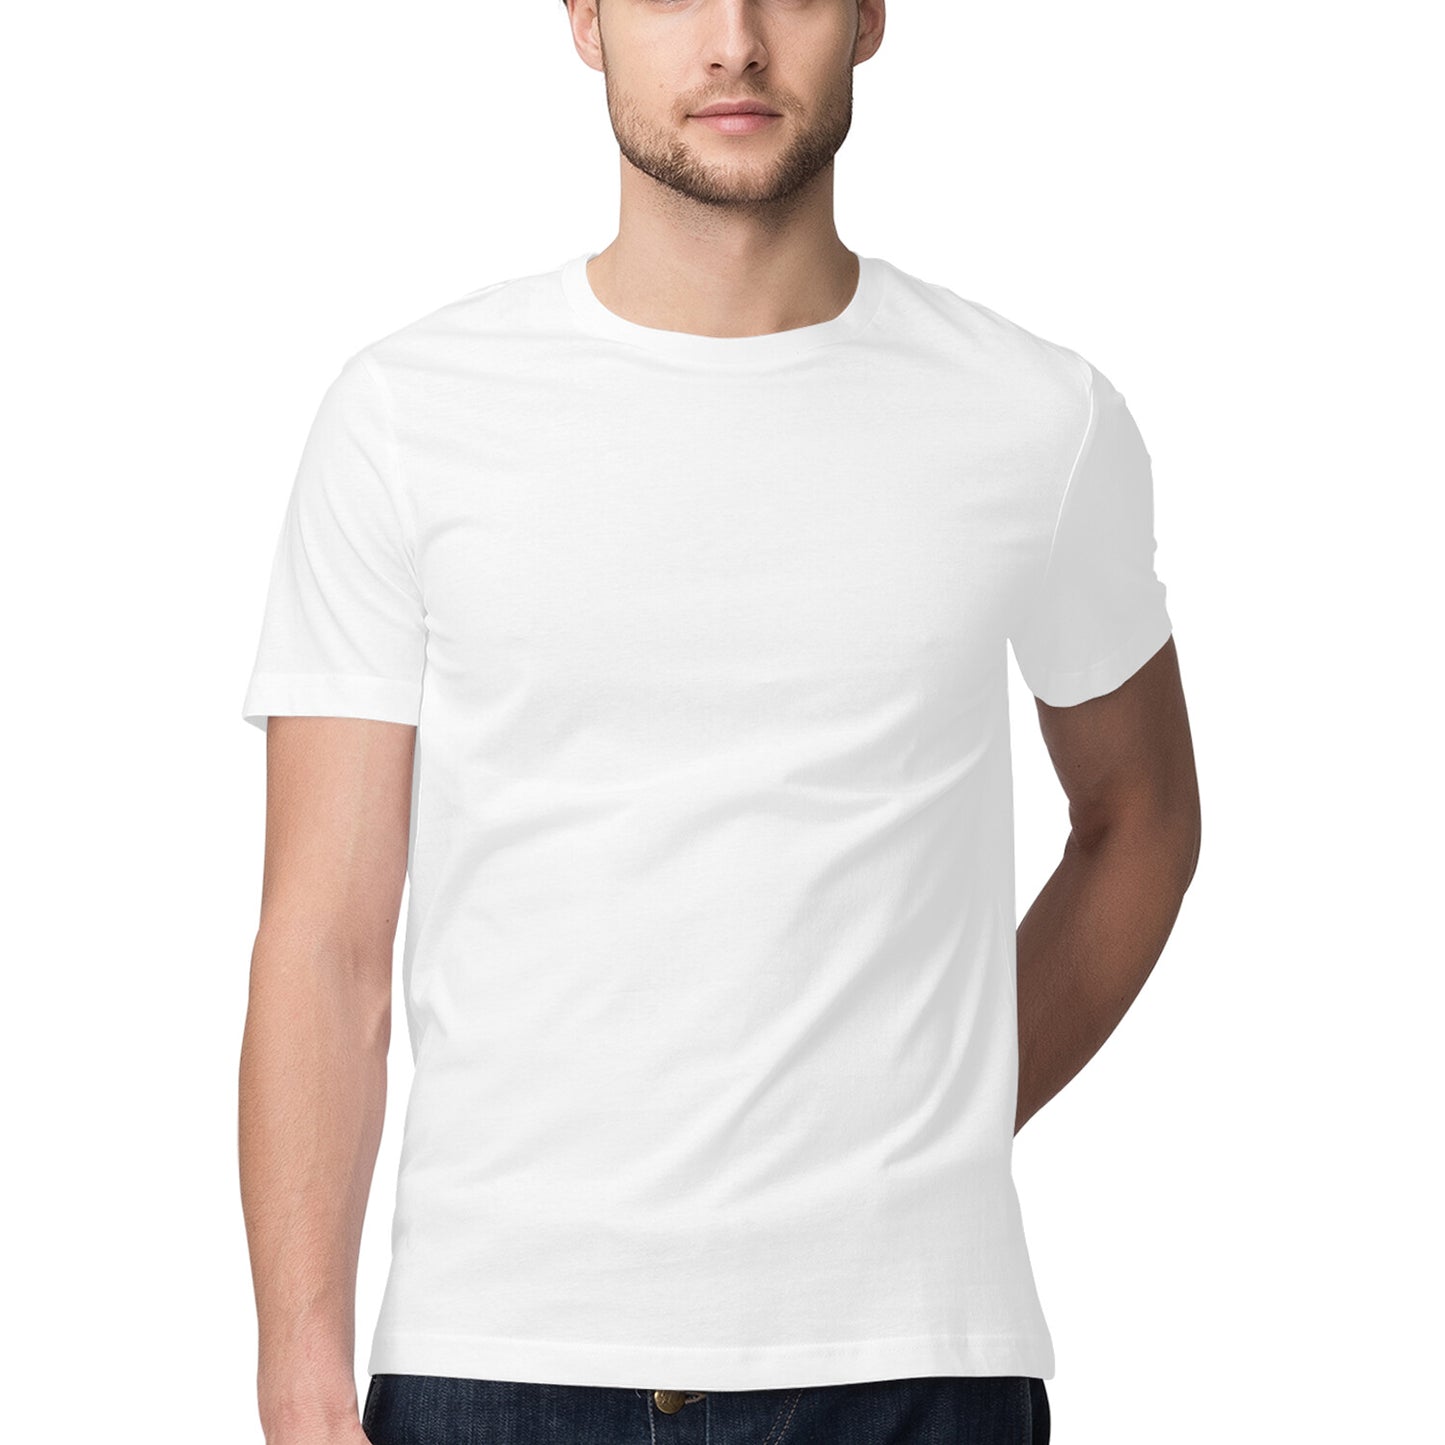 White - Half Sleeve Round Neck T-Shirt